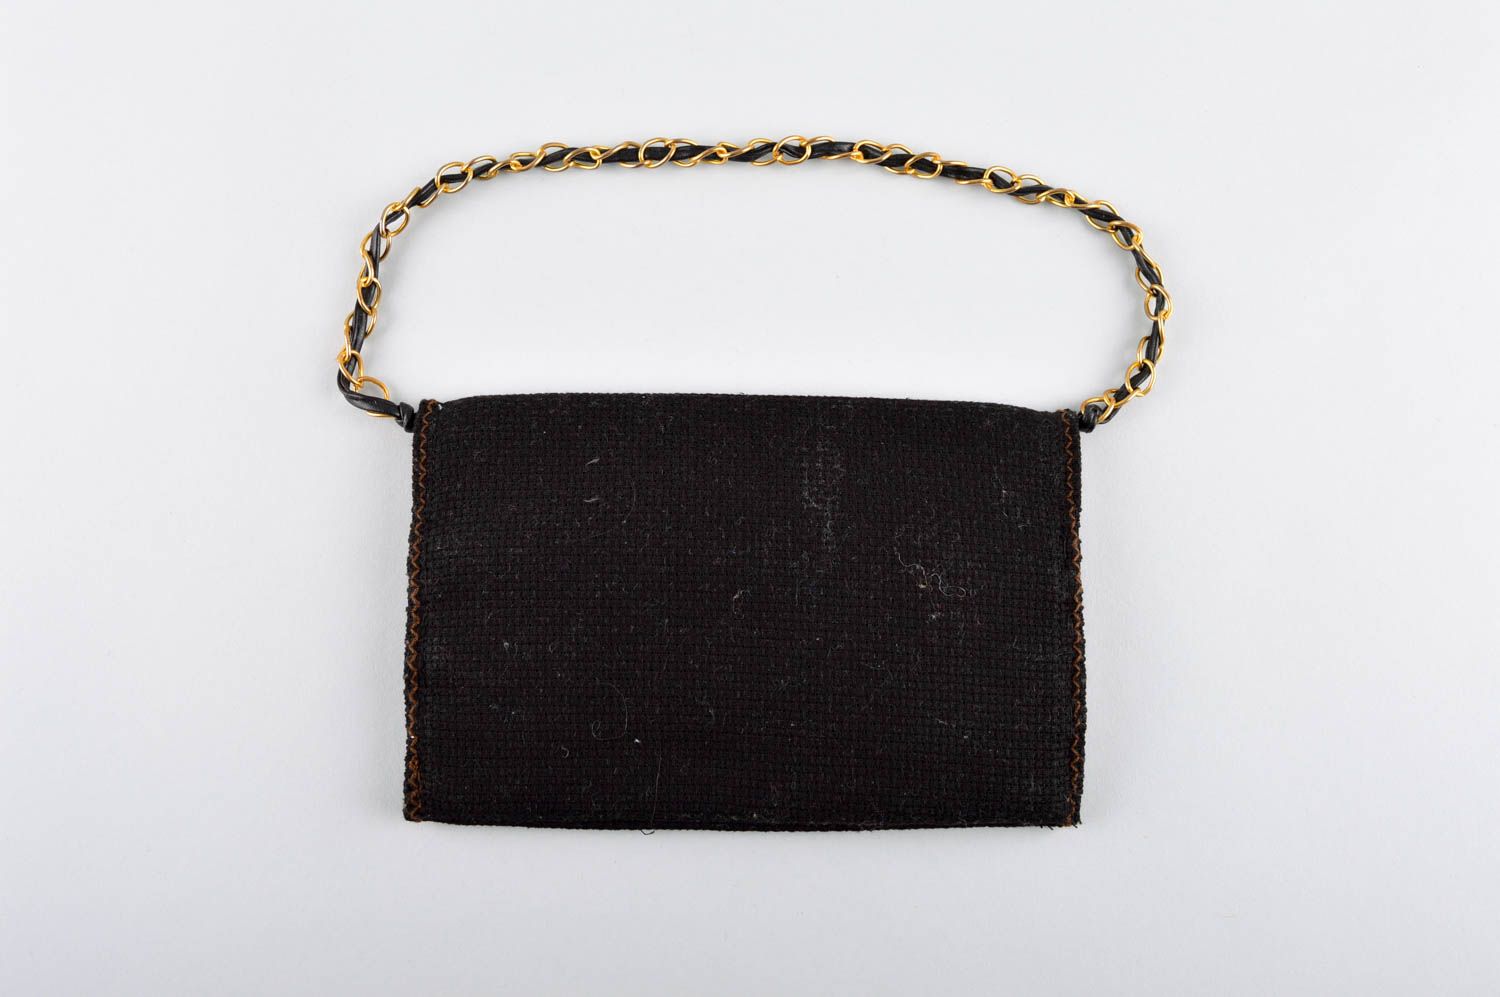 Handmade purse with embroidery stylish handbag fashion accessories for girls photo 3